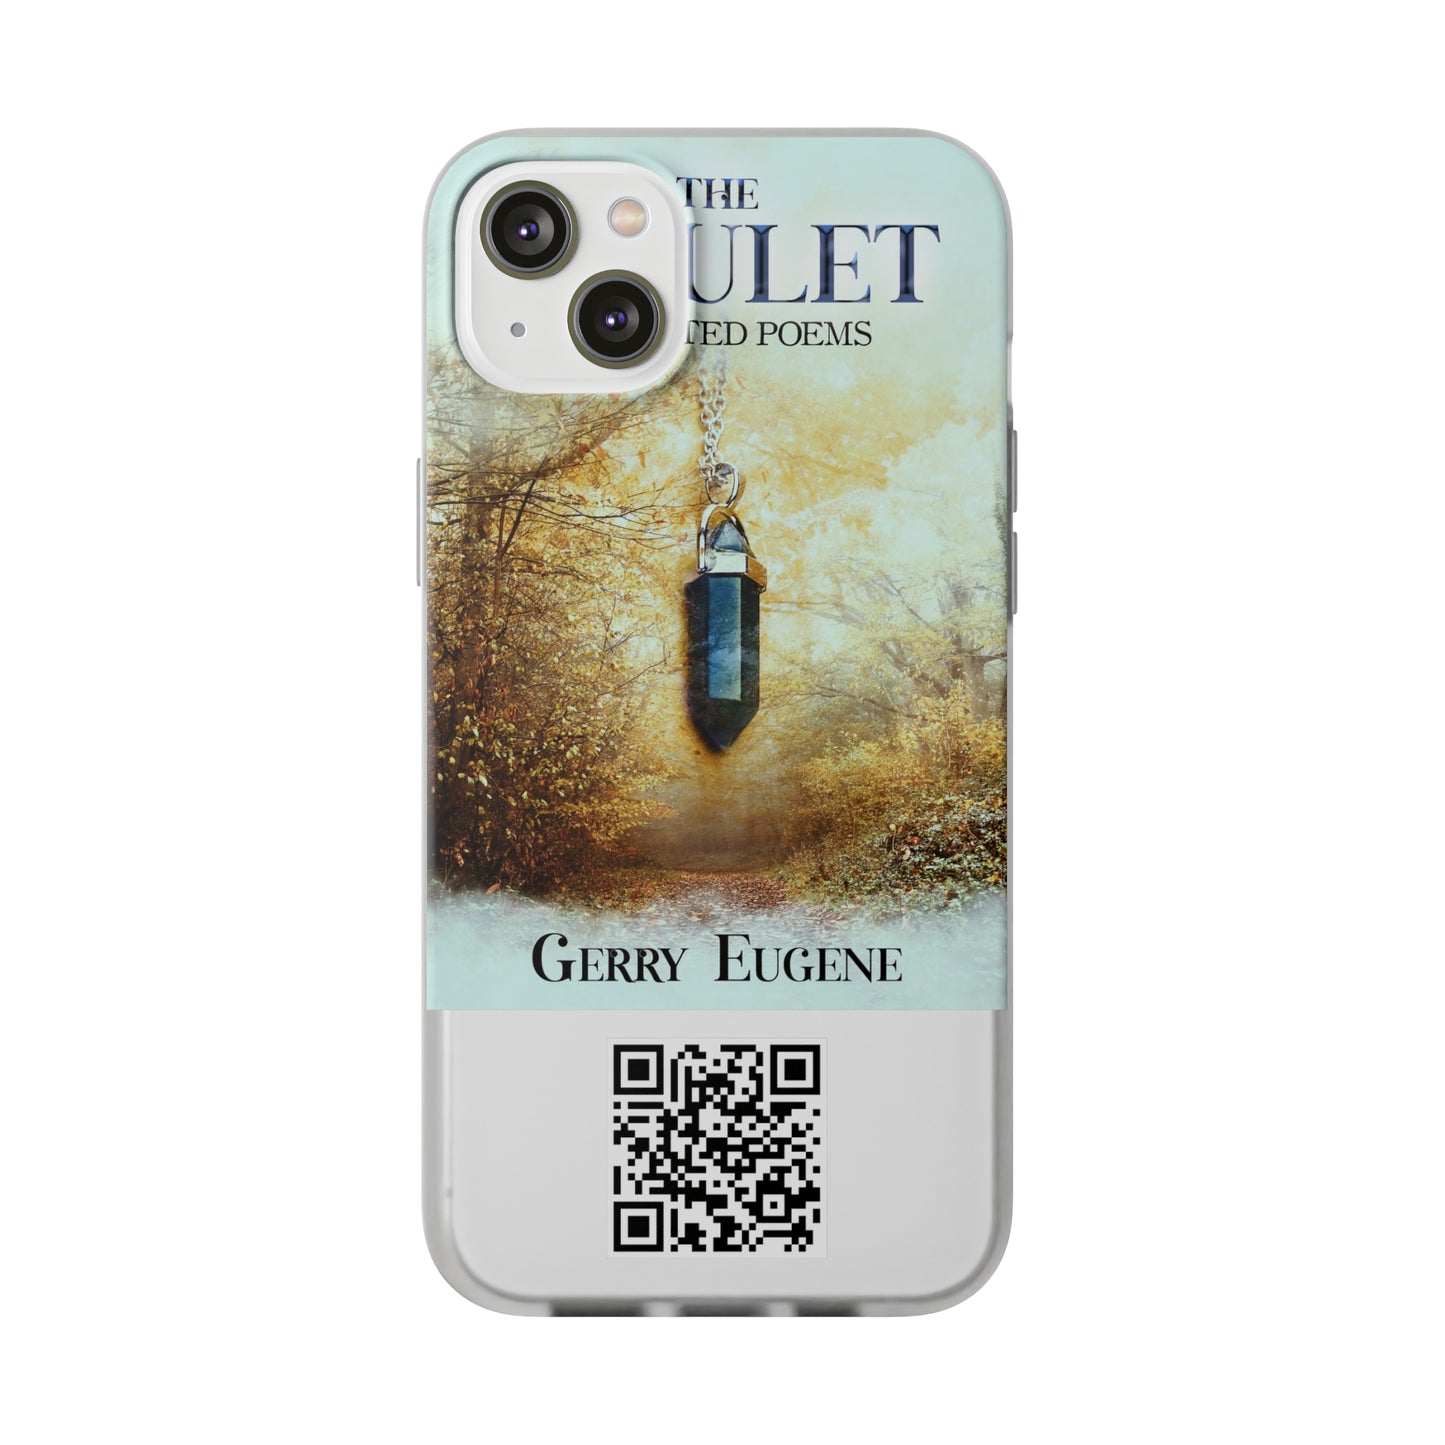 The Amulet - Flexible Phone Case